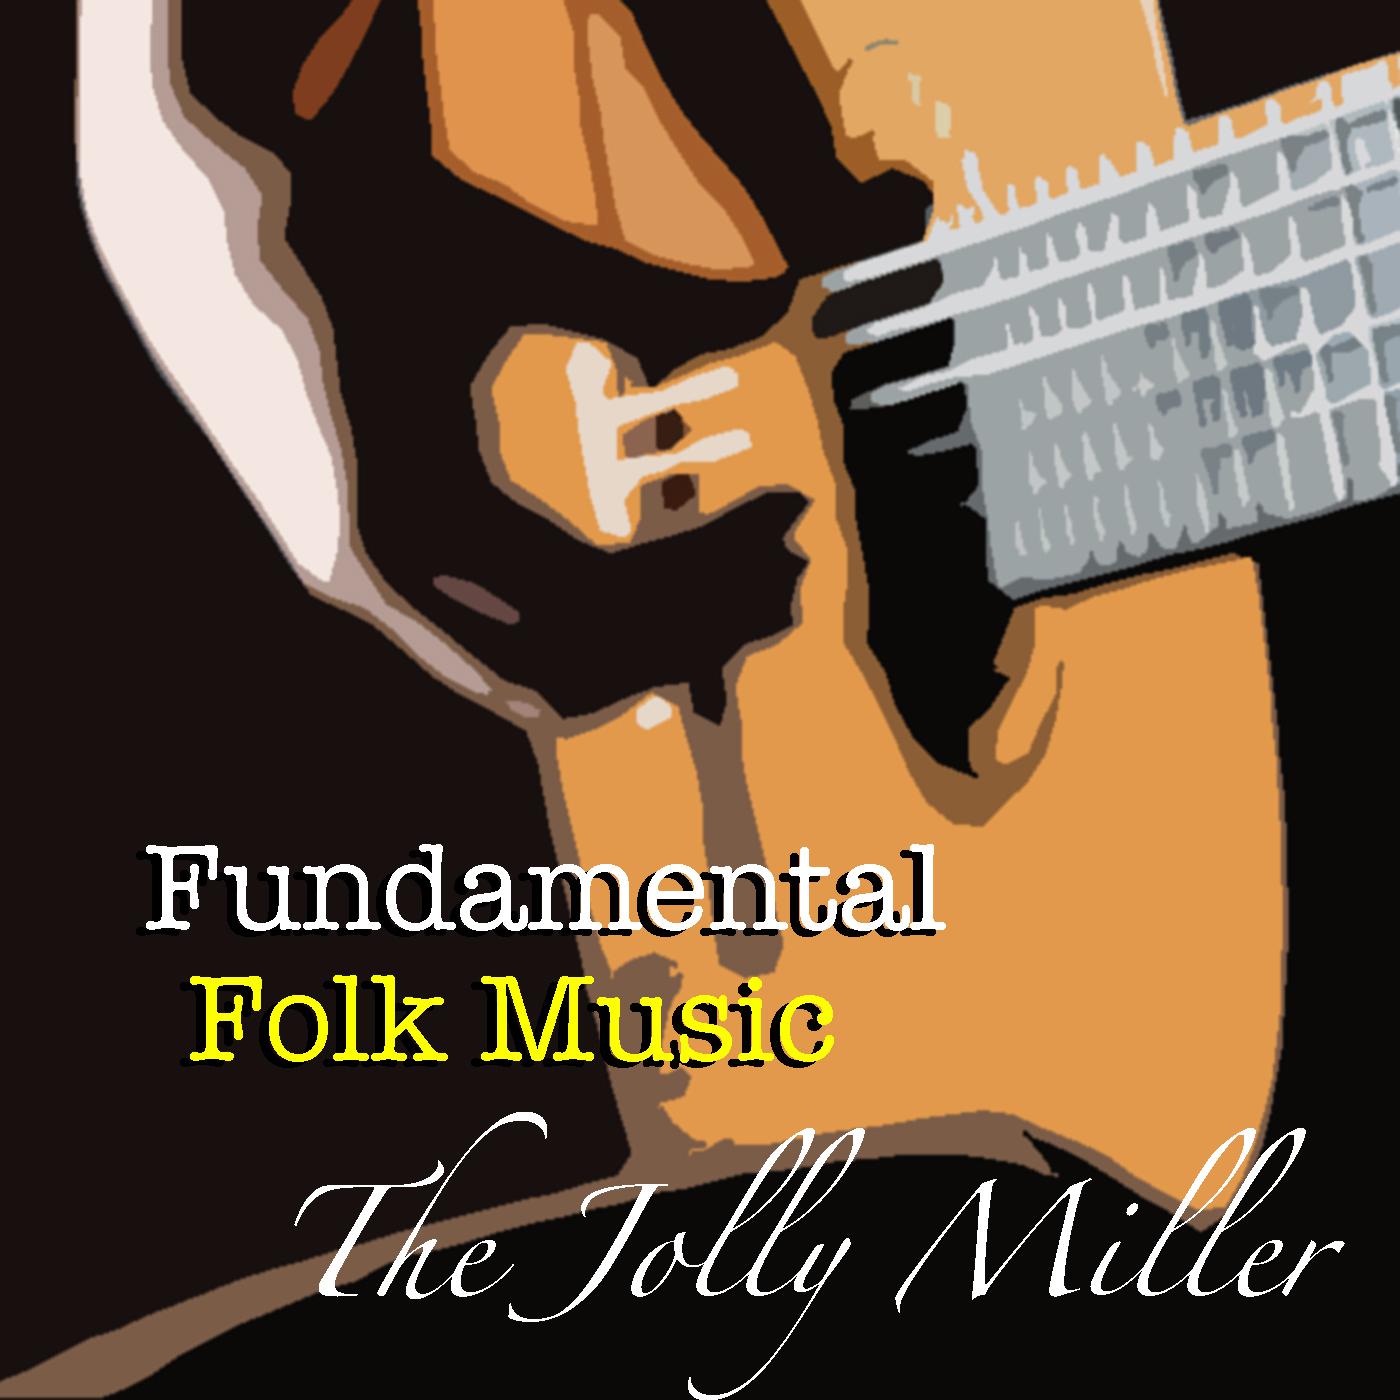 The Jolly Miller Fundamental Folk Music